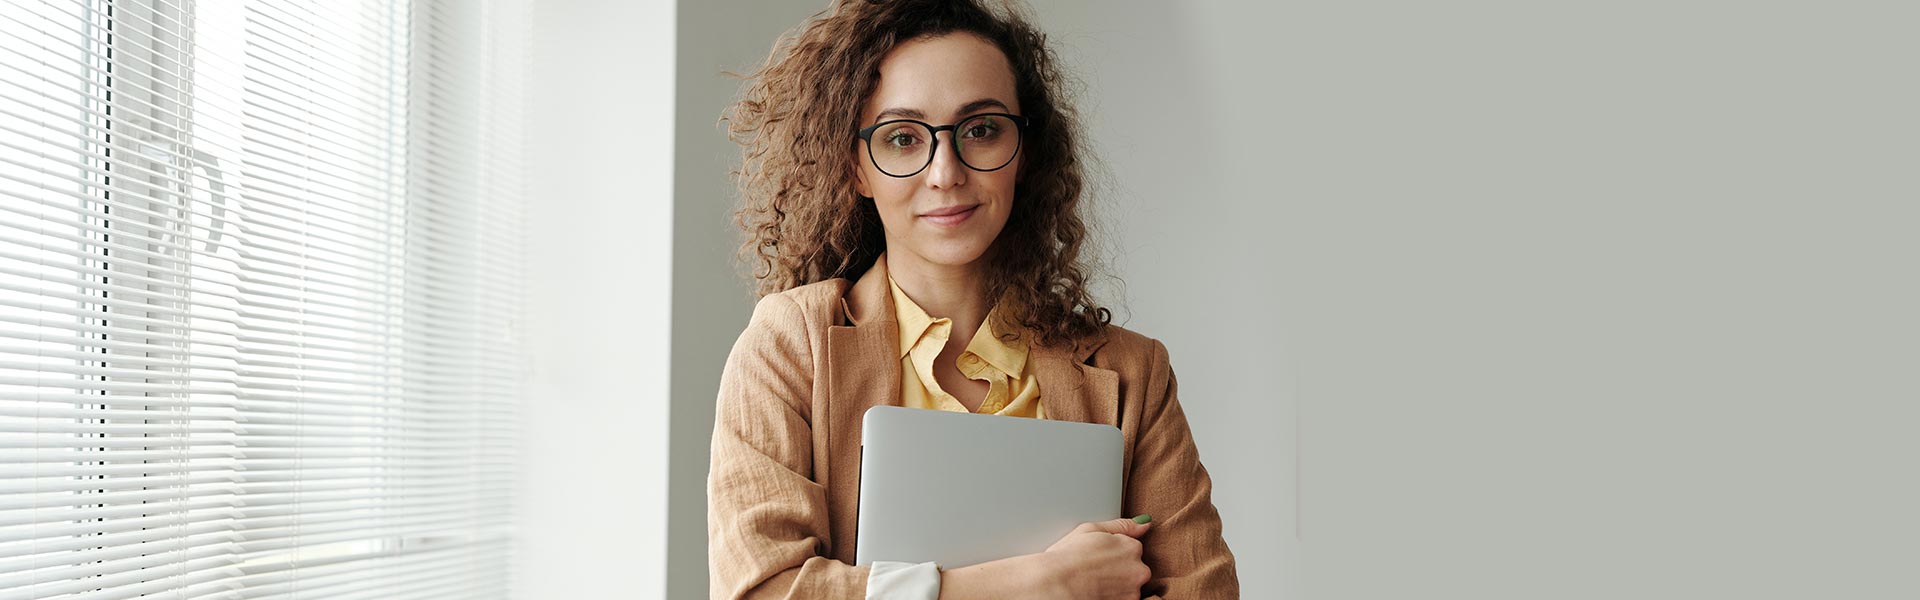 smart woman holding a laptop